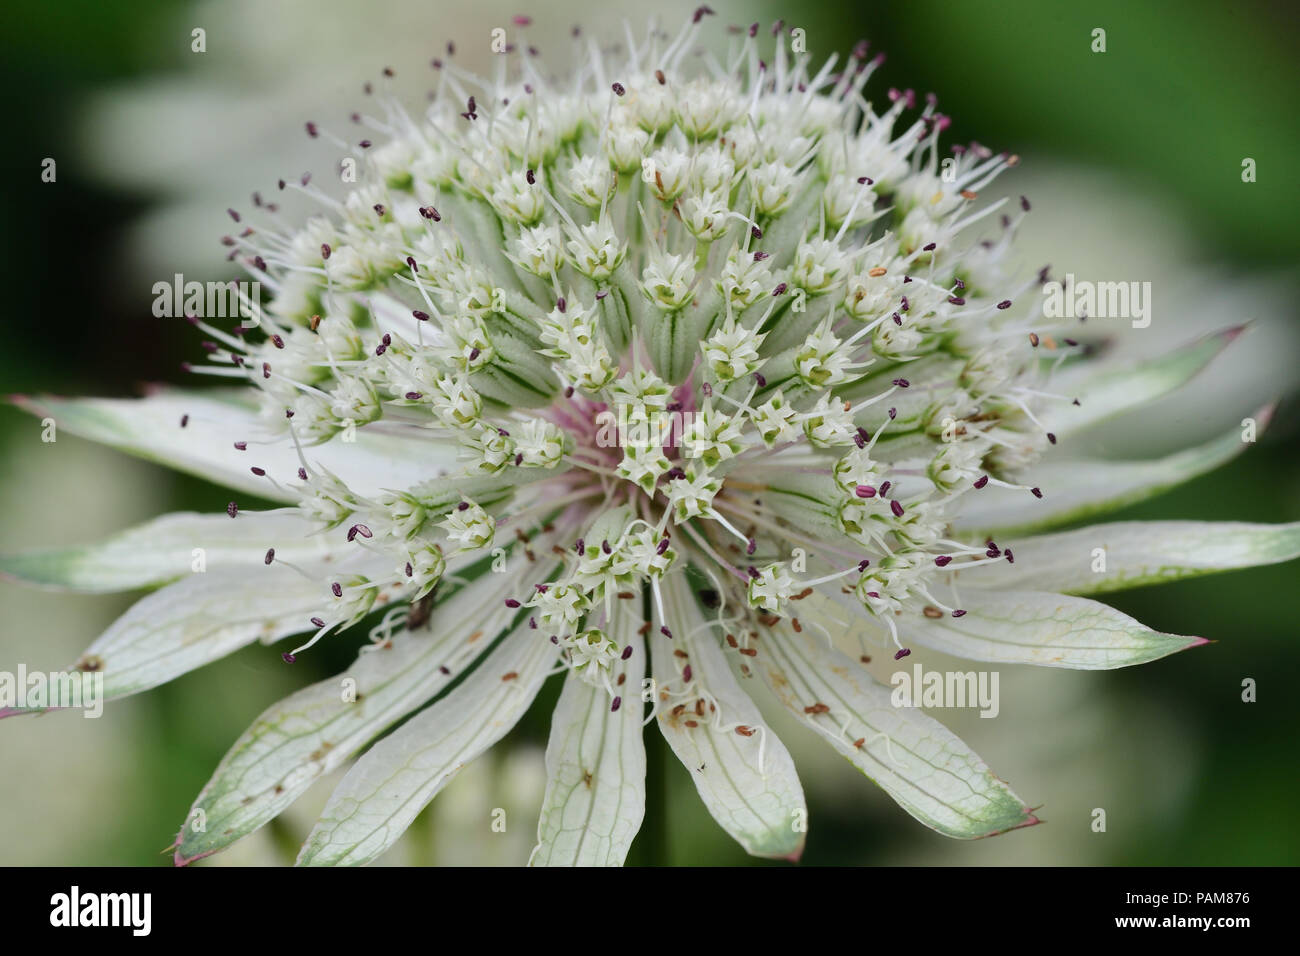 Macro shot of an astrantia flower in bloom Stock Photo